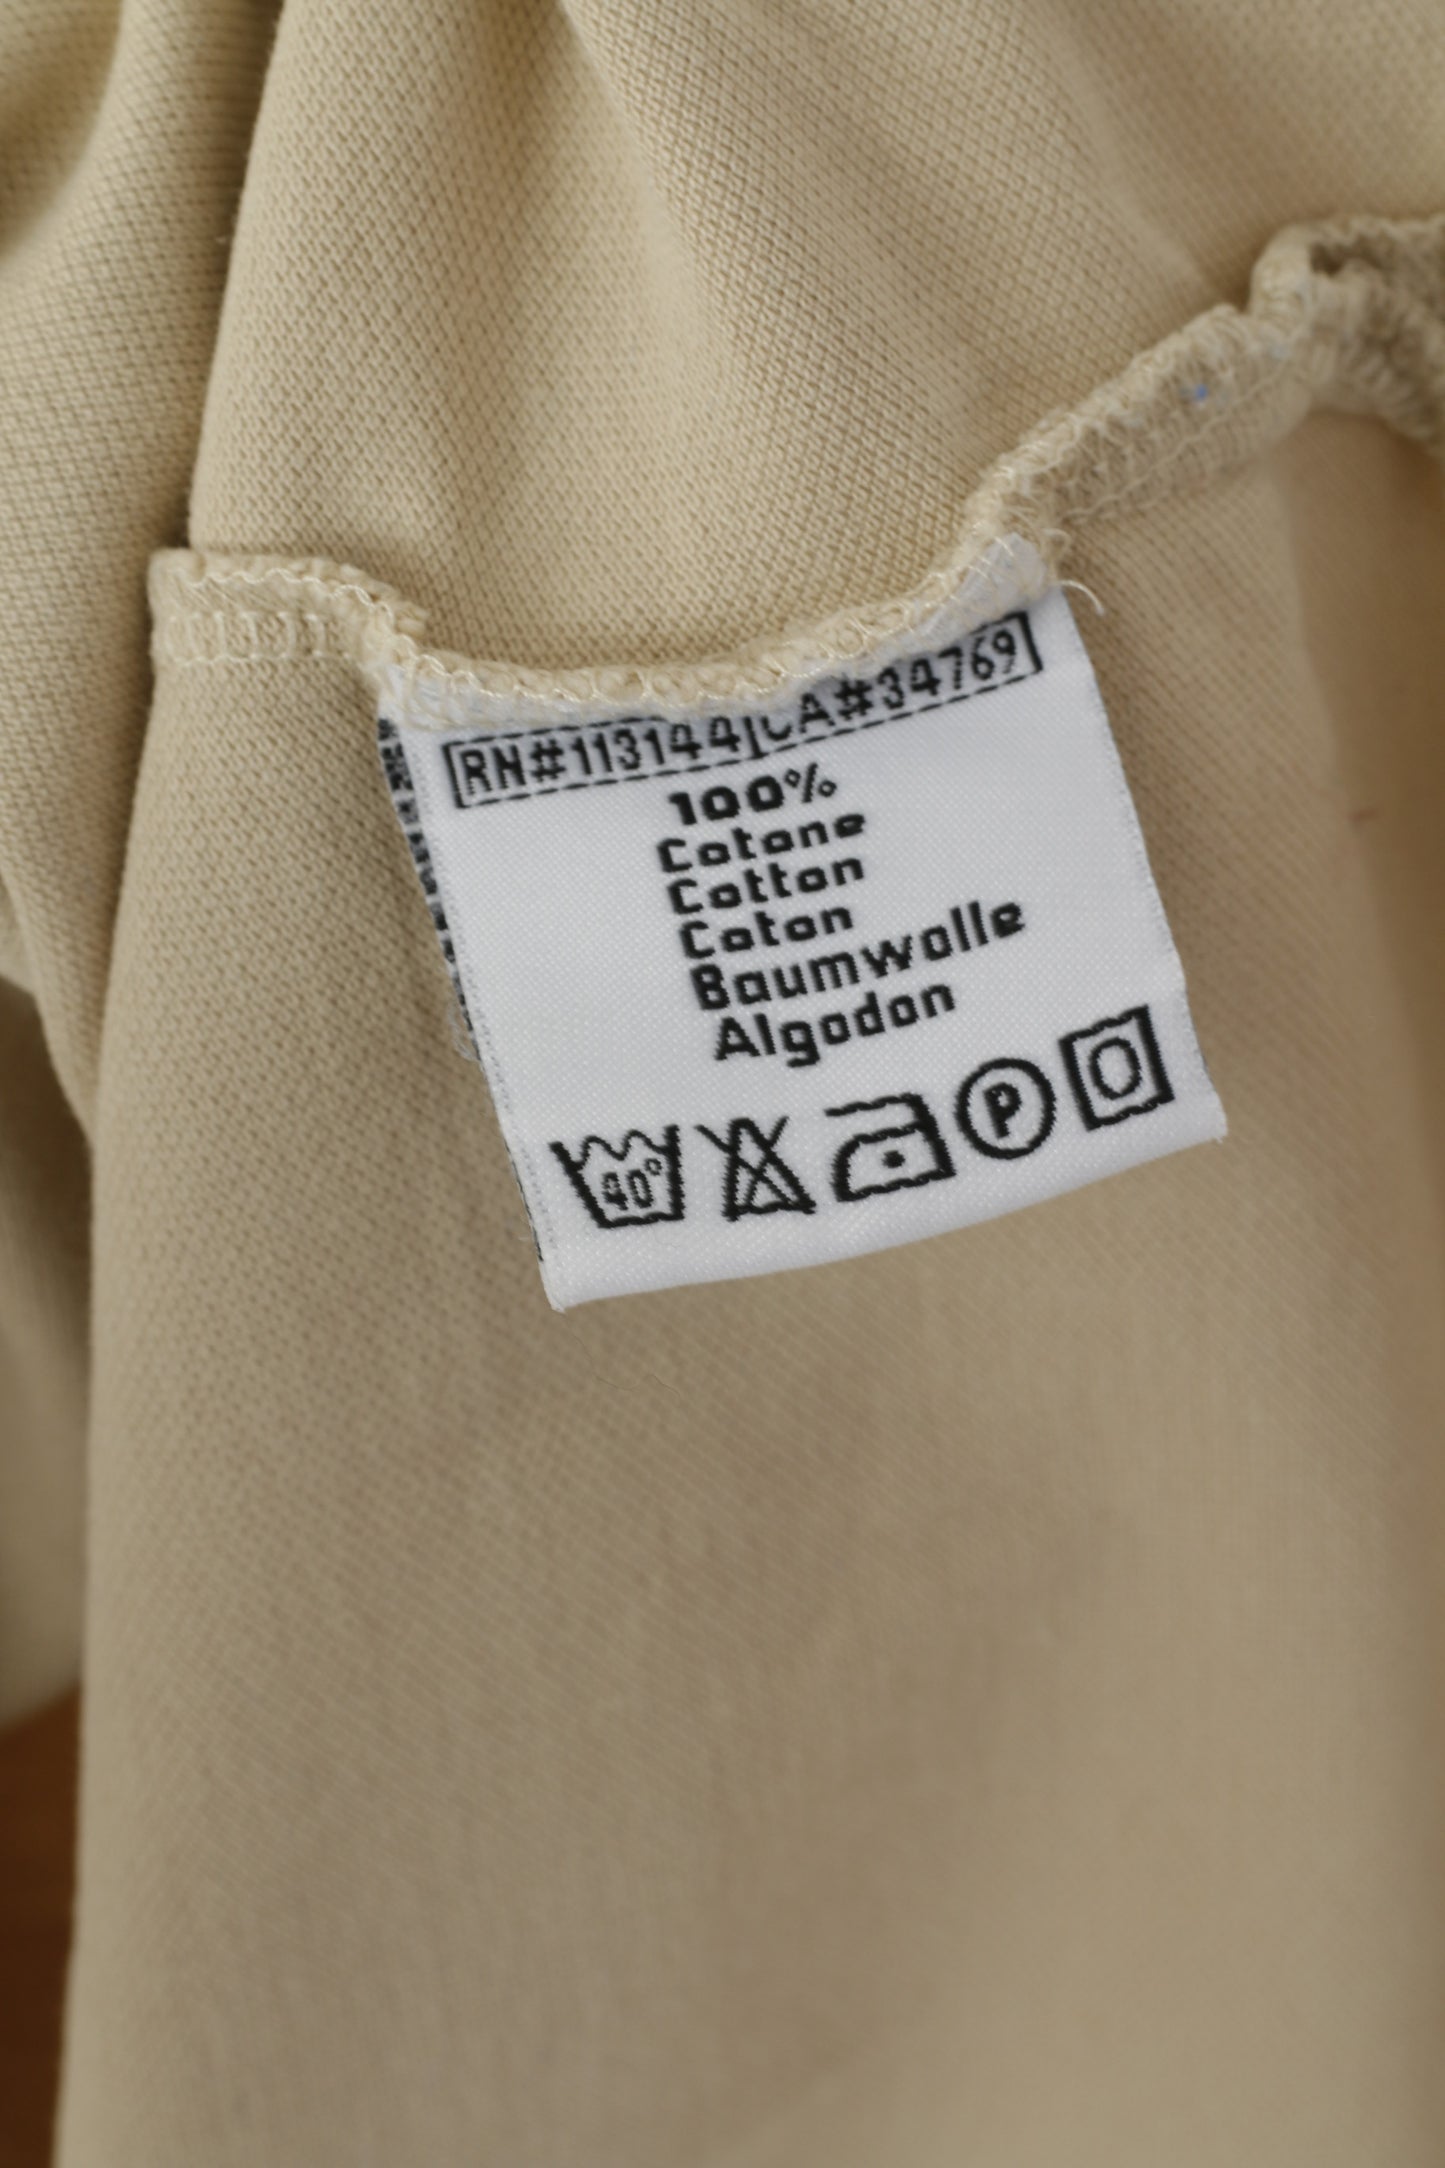 Kappa Men XL Polo Shirt Beige Cotton Detailed Buttons Sportswear Plain Top